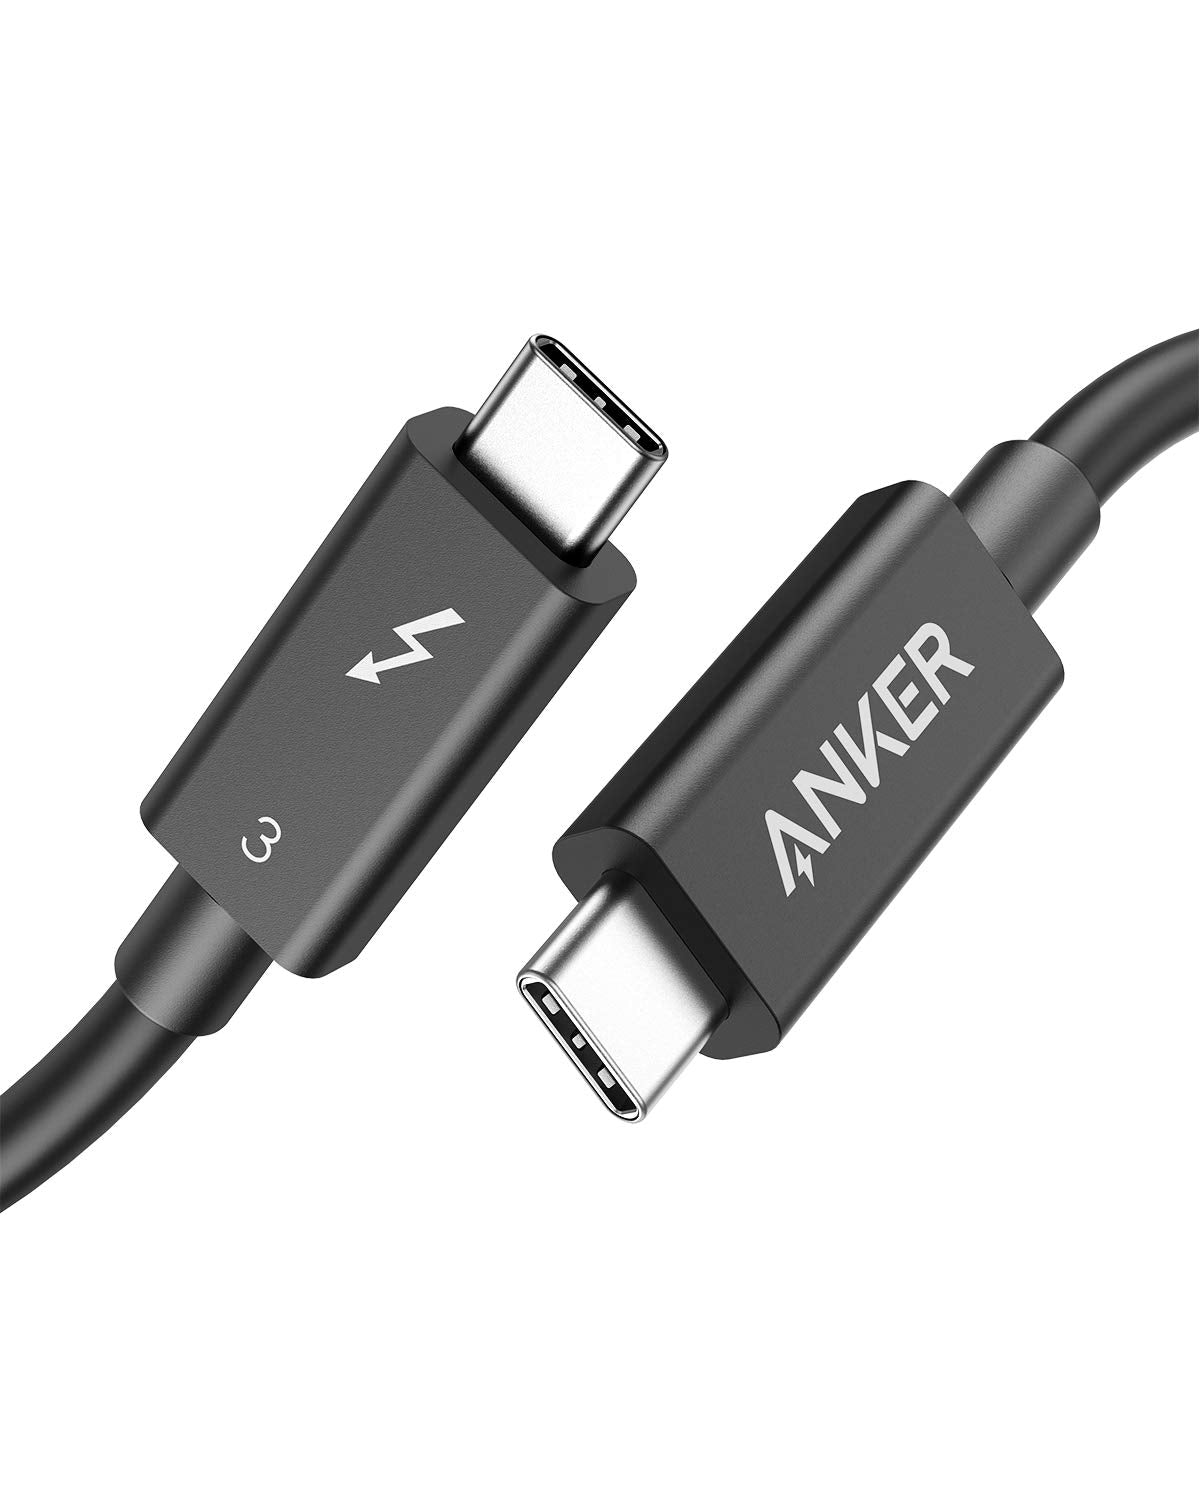 Anker USB-C Thunderbolt Cable (2.3 ft) - Anker US